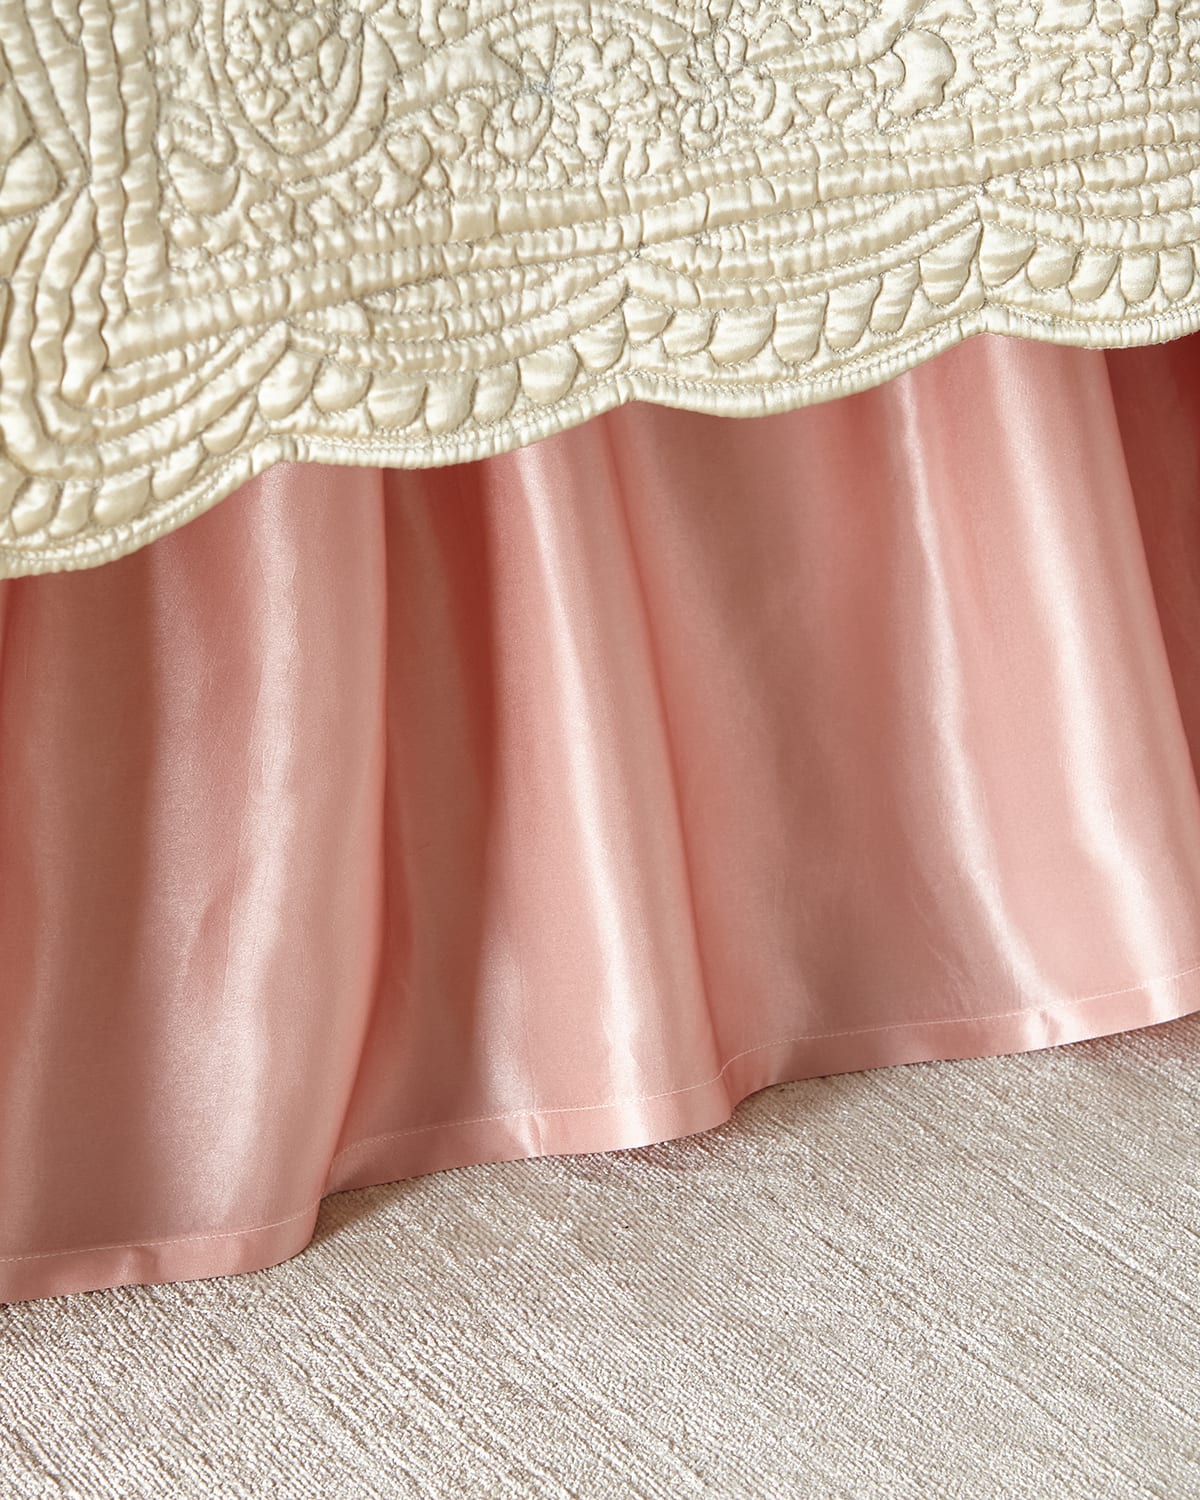 Amity Home Tudor Queen Dust Skirt In Pink